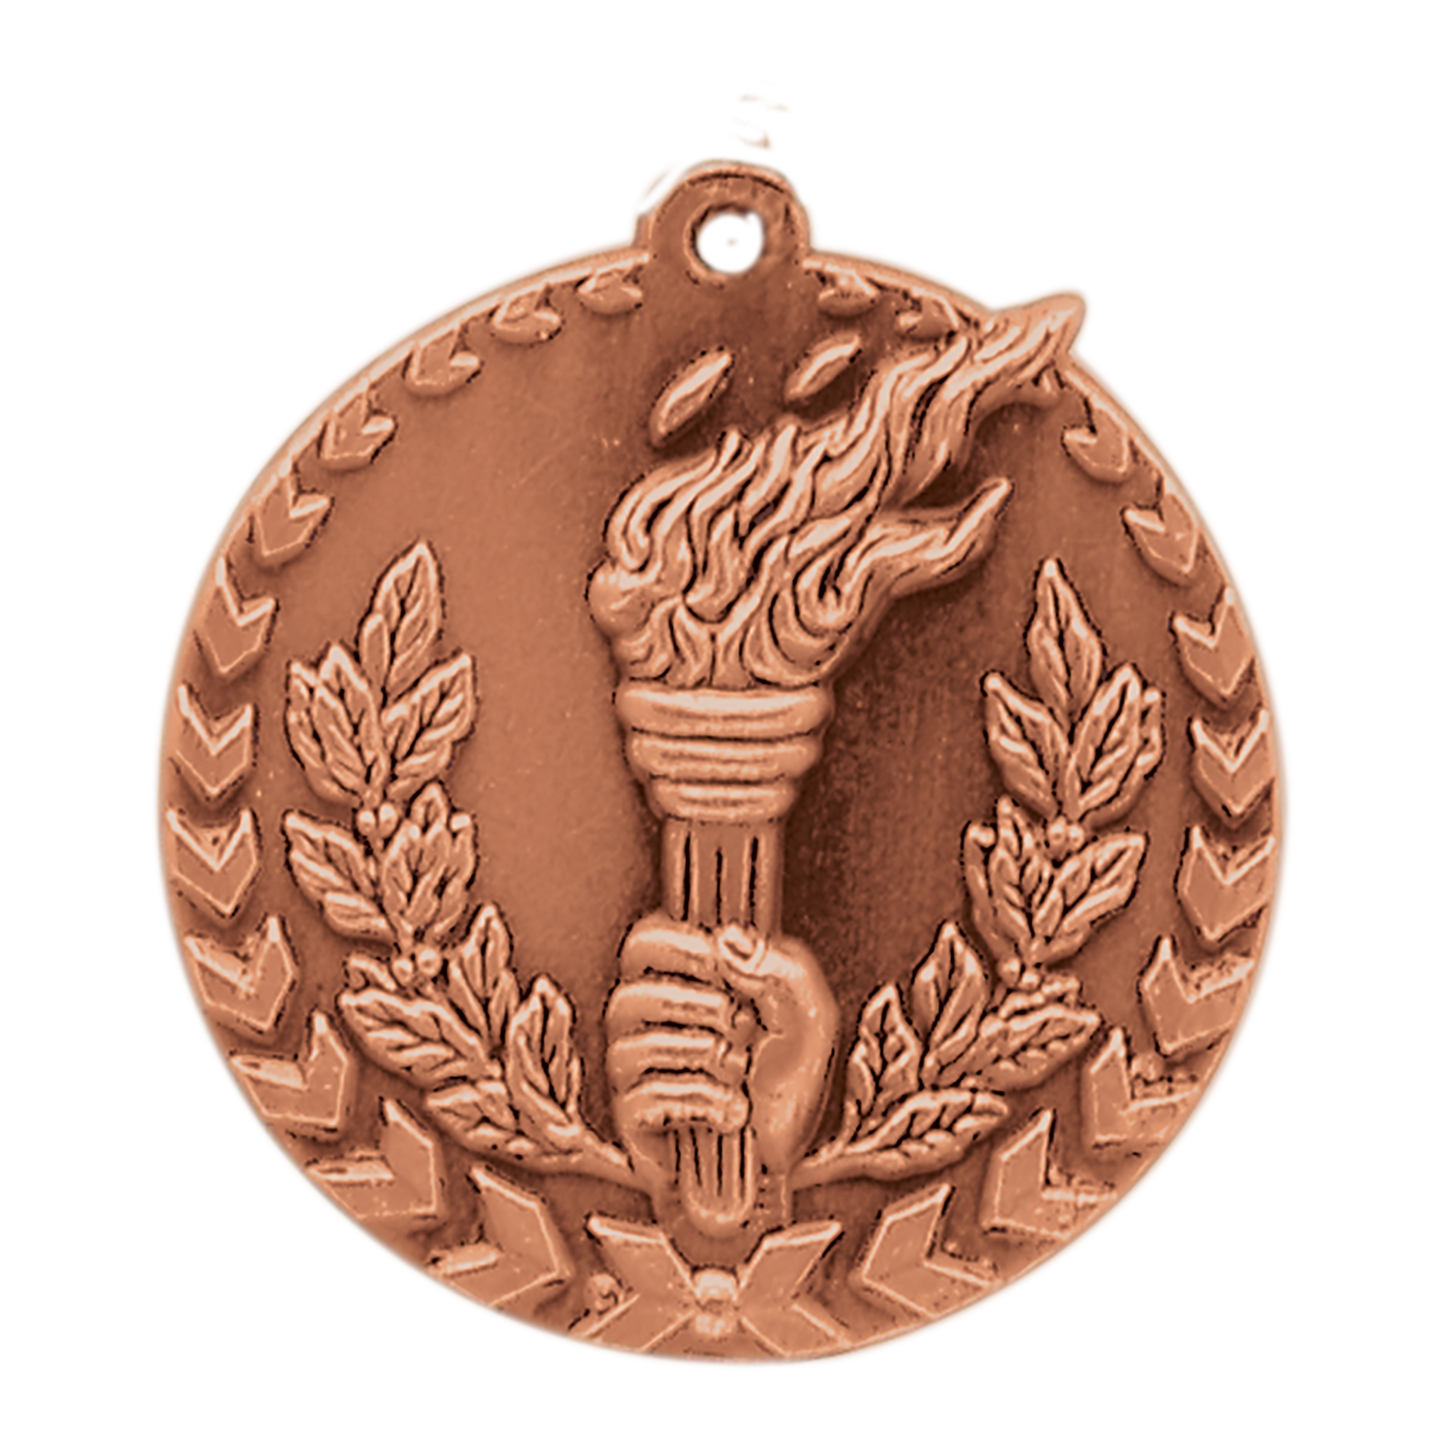 1 3/4" Torch Millennium Medal